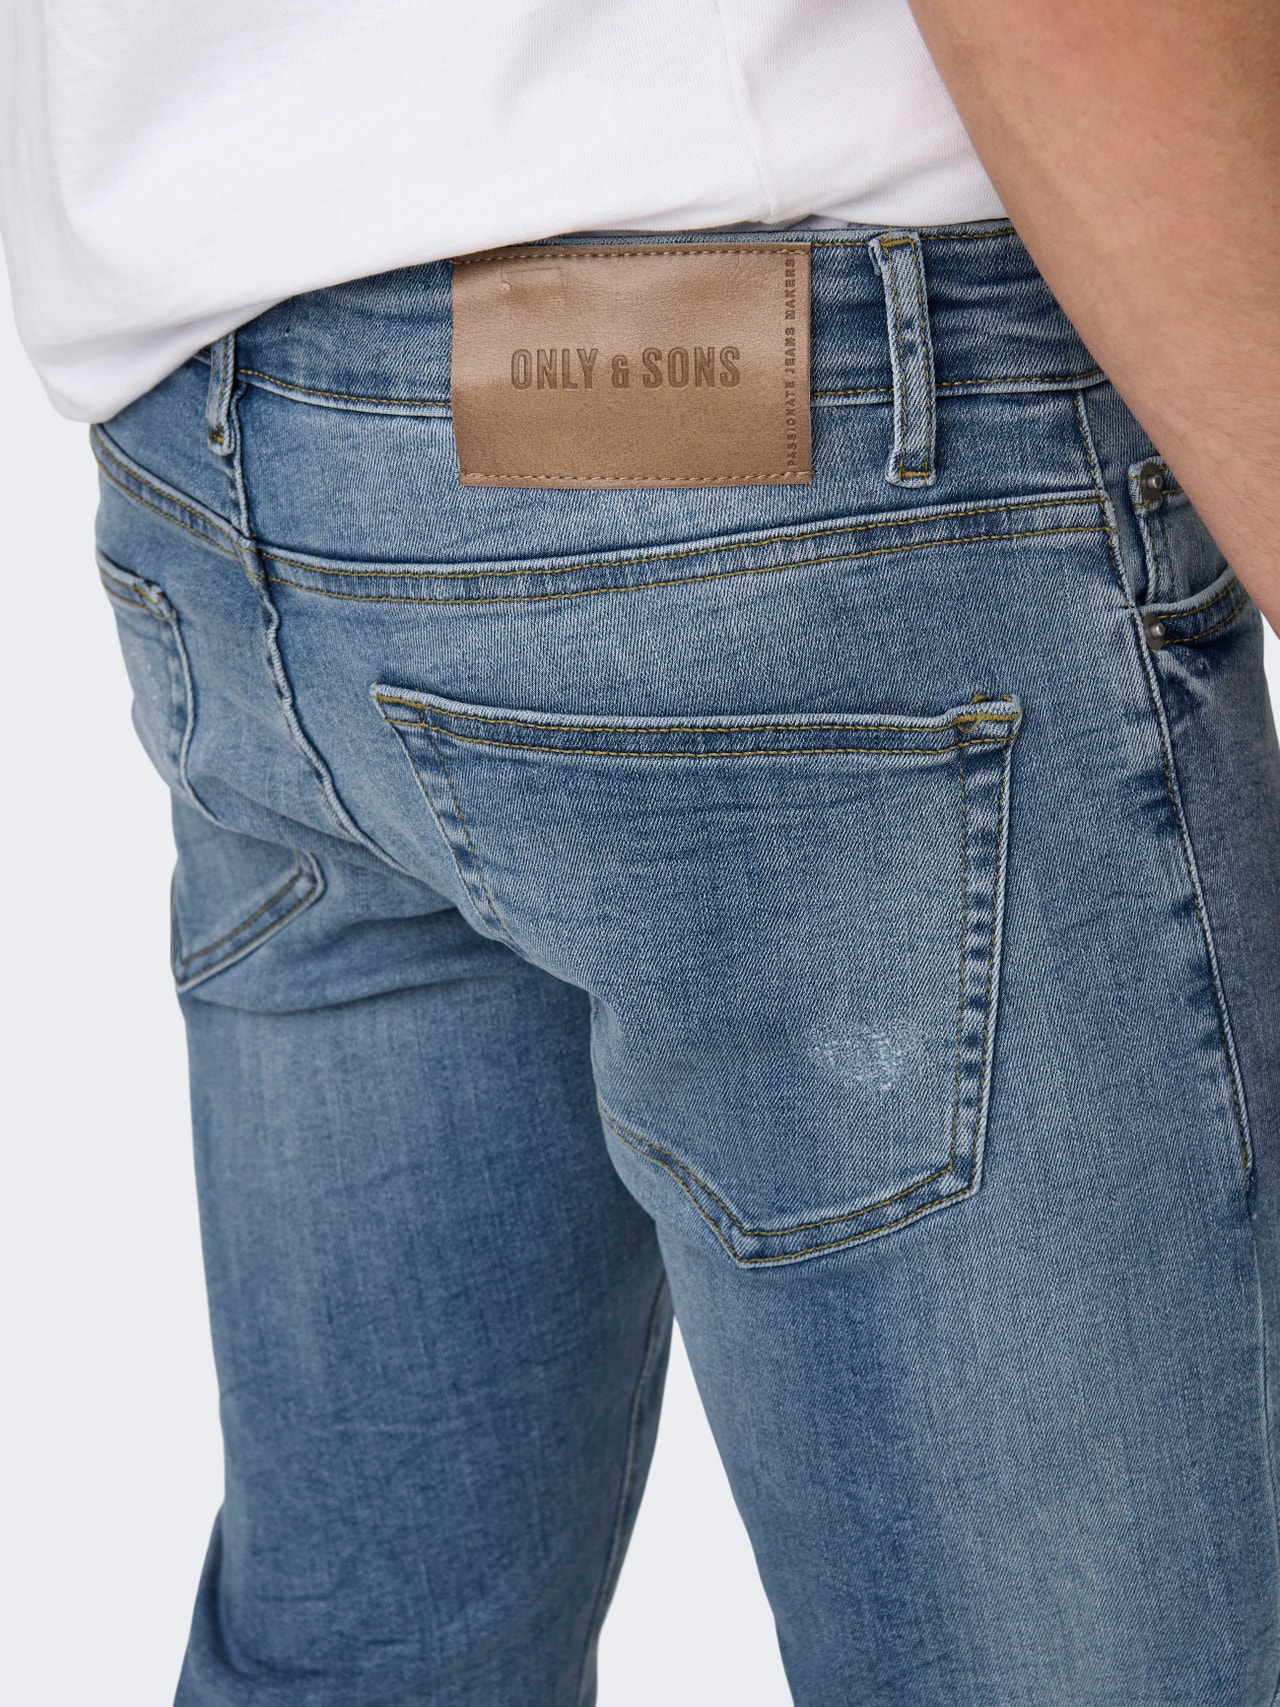 ONLY & SONS Jeans Slim Fit Taille classique -Blue Denim - 22023230